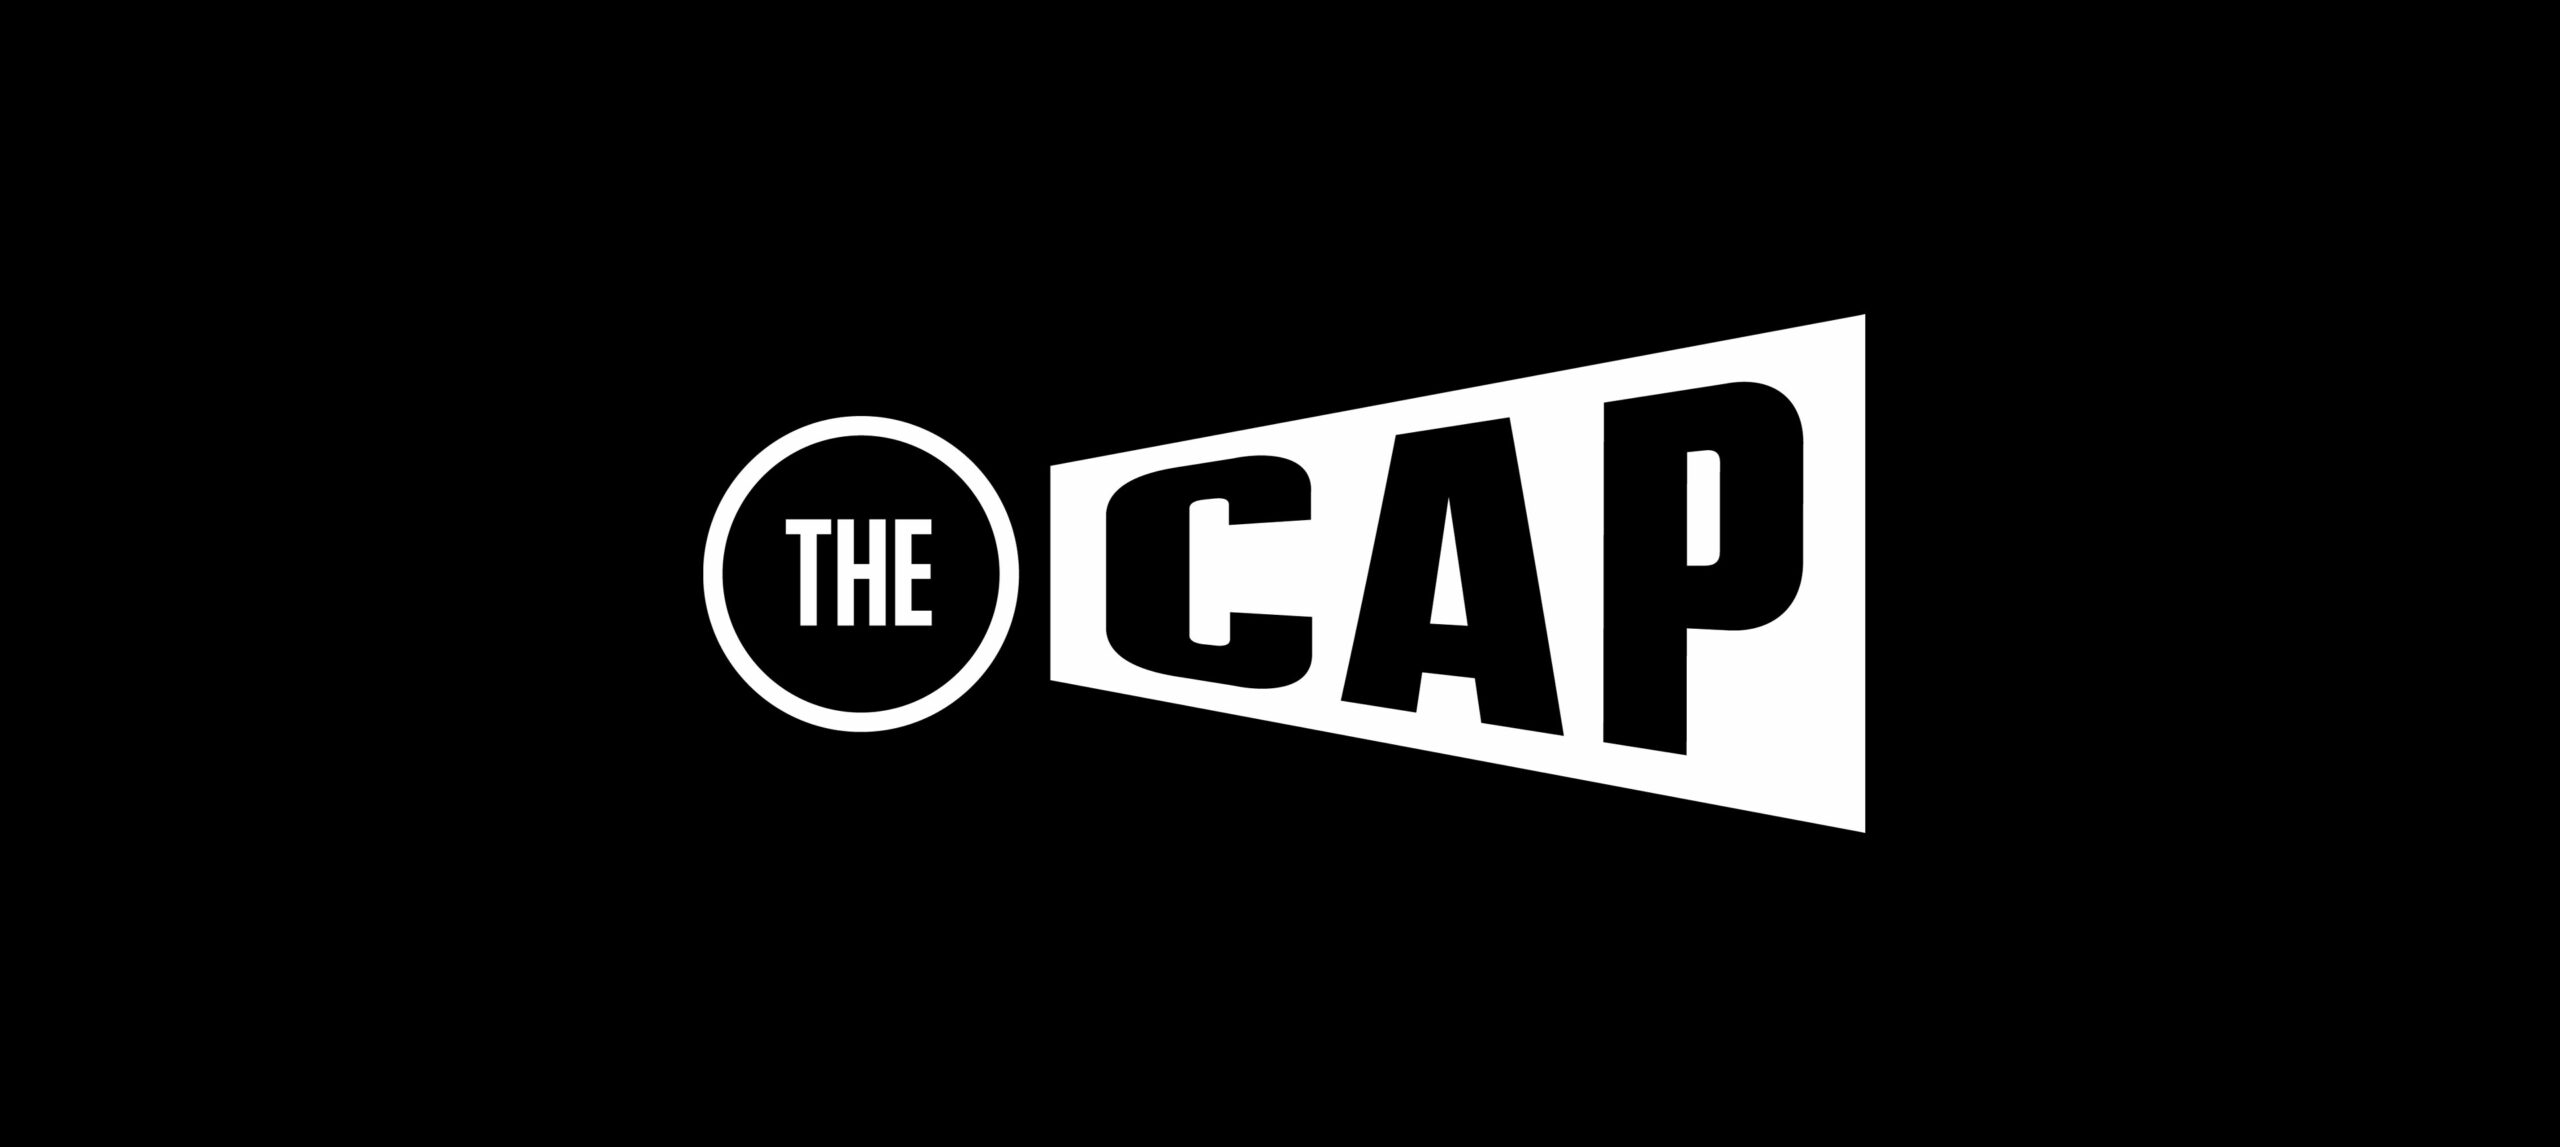 The Cap Logo